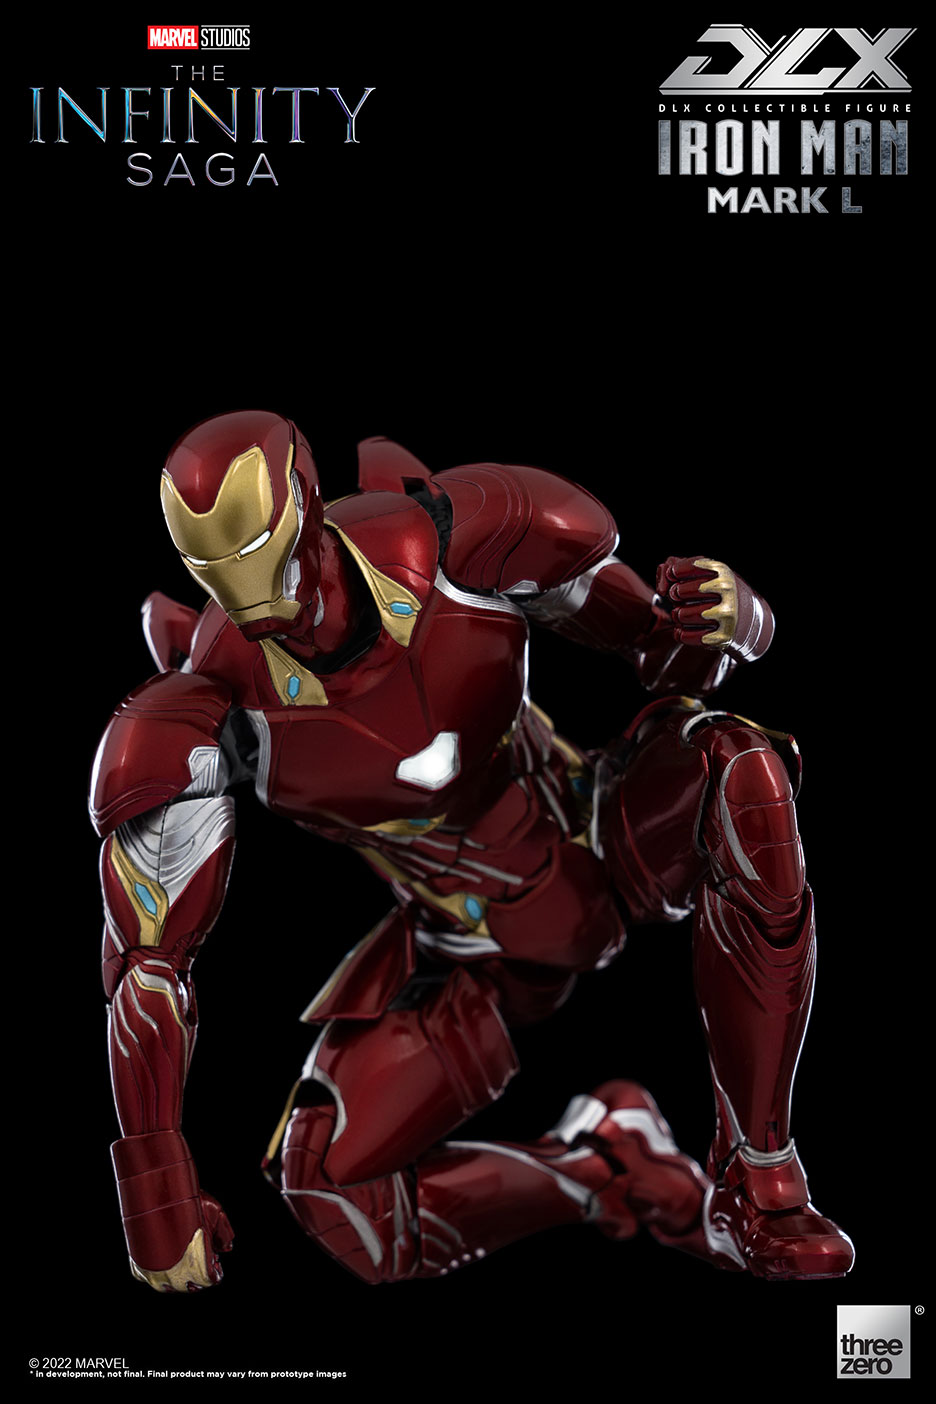 Figurine 1/12 DLX Iron Man Mark 3 - Threezero - Infinity Saga - FunkyShop